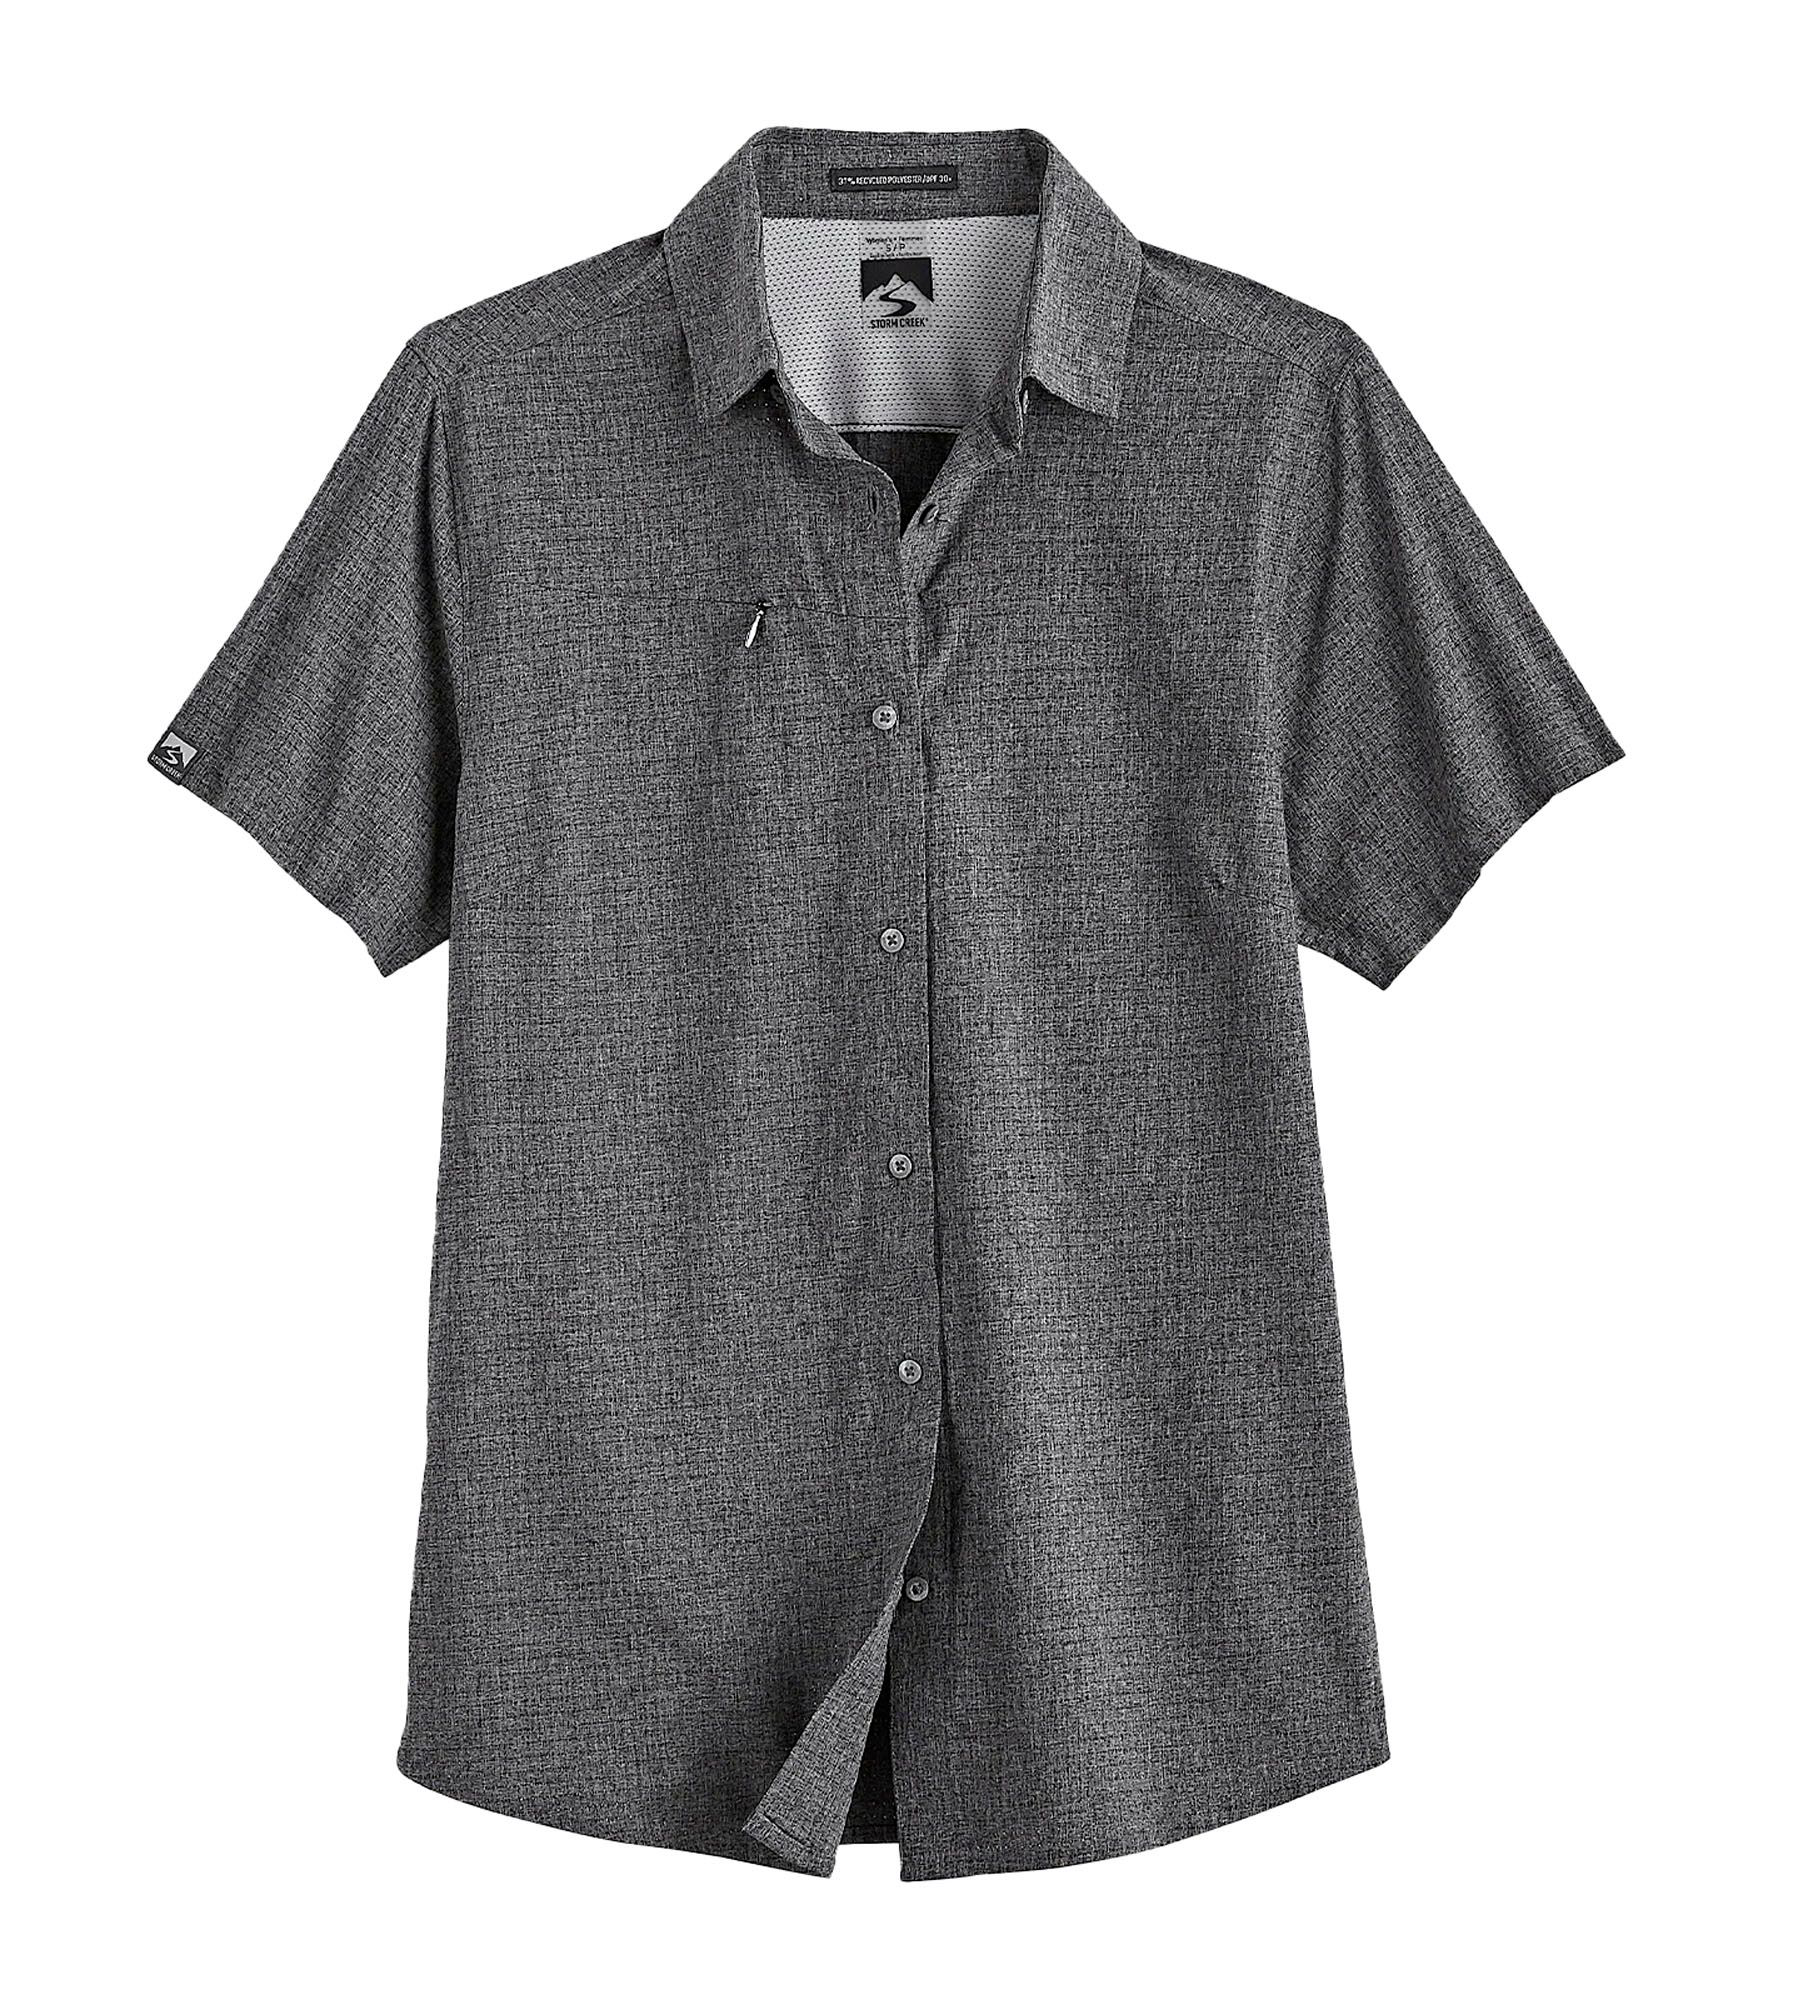 Storm Creek Naturalist Short-Sleeve Shirt for Ladies - Gray - 2XL